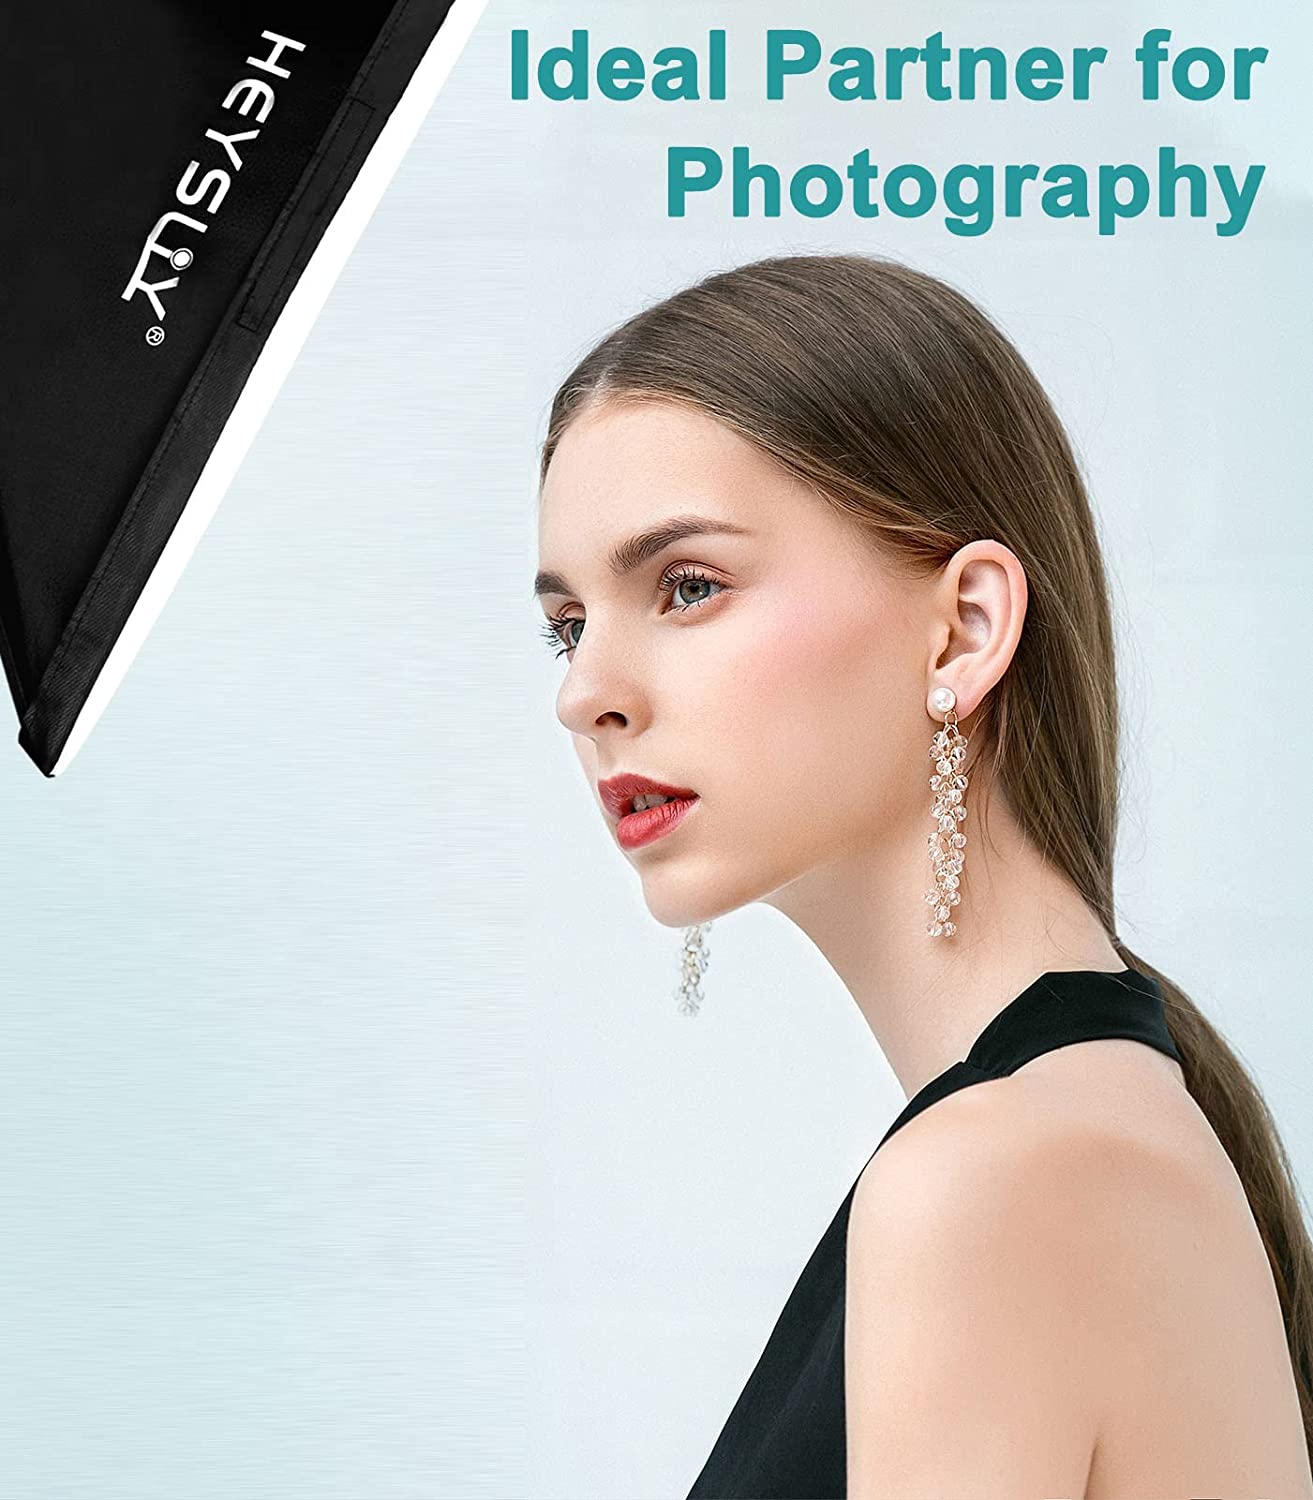 Heysliy Softbox Lighting Kit 2x50x70cm, Photography Lighting with 150W 5500K Daylight Bulb & E27 Socket, Studio Light for Fashion Portrait, Product Photography, Video Shooting, Live Stream